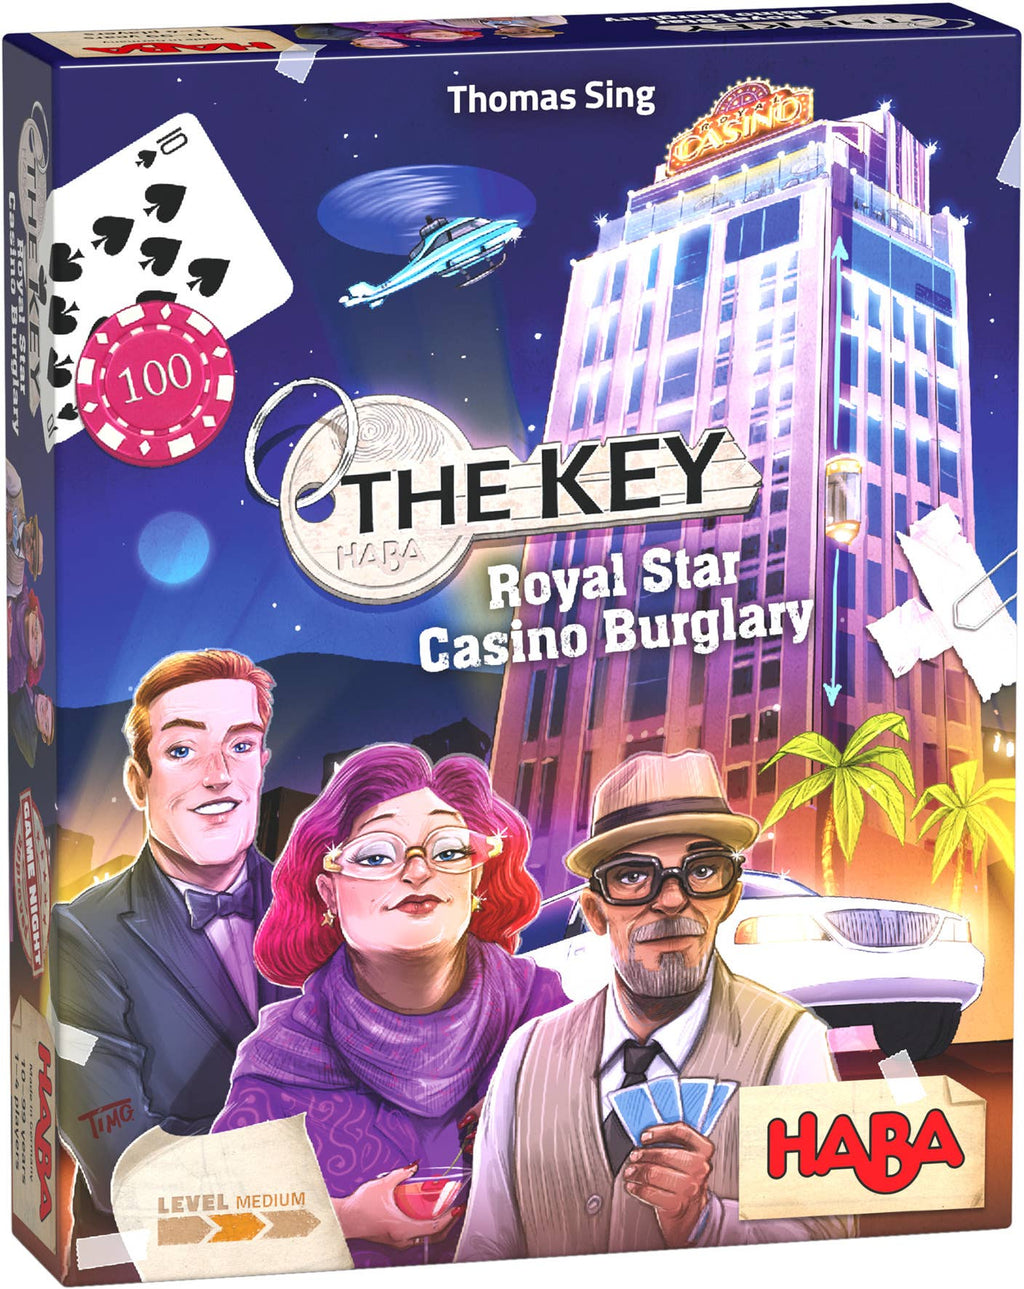 HABA - The Key – Royal Star Casino Burglary - Board Game - Elves & the Shoemaker